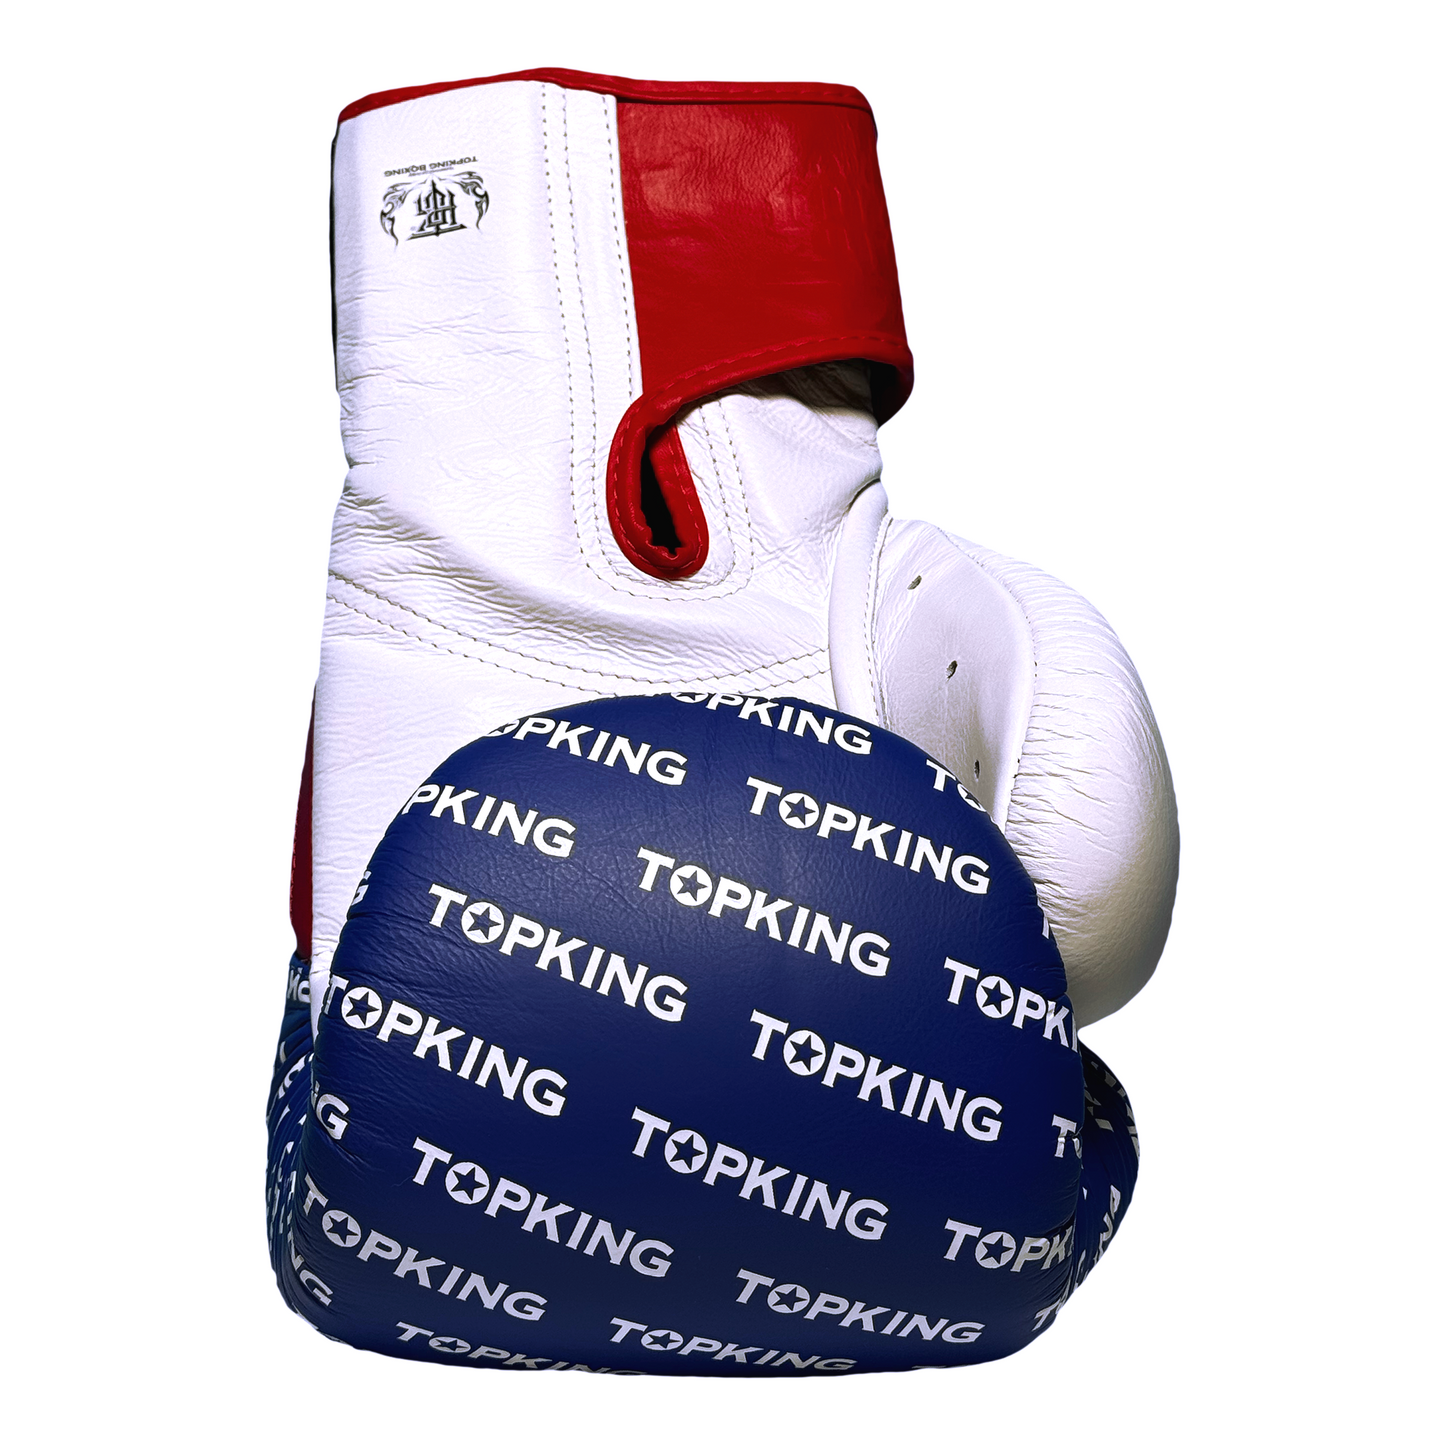 Top King Boxhandschuhe "Full Impact" weiss blau rot